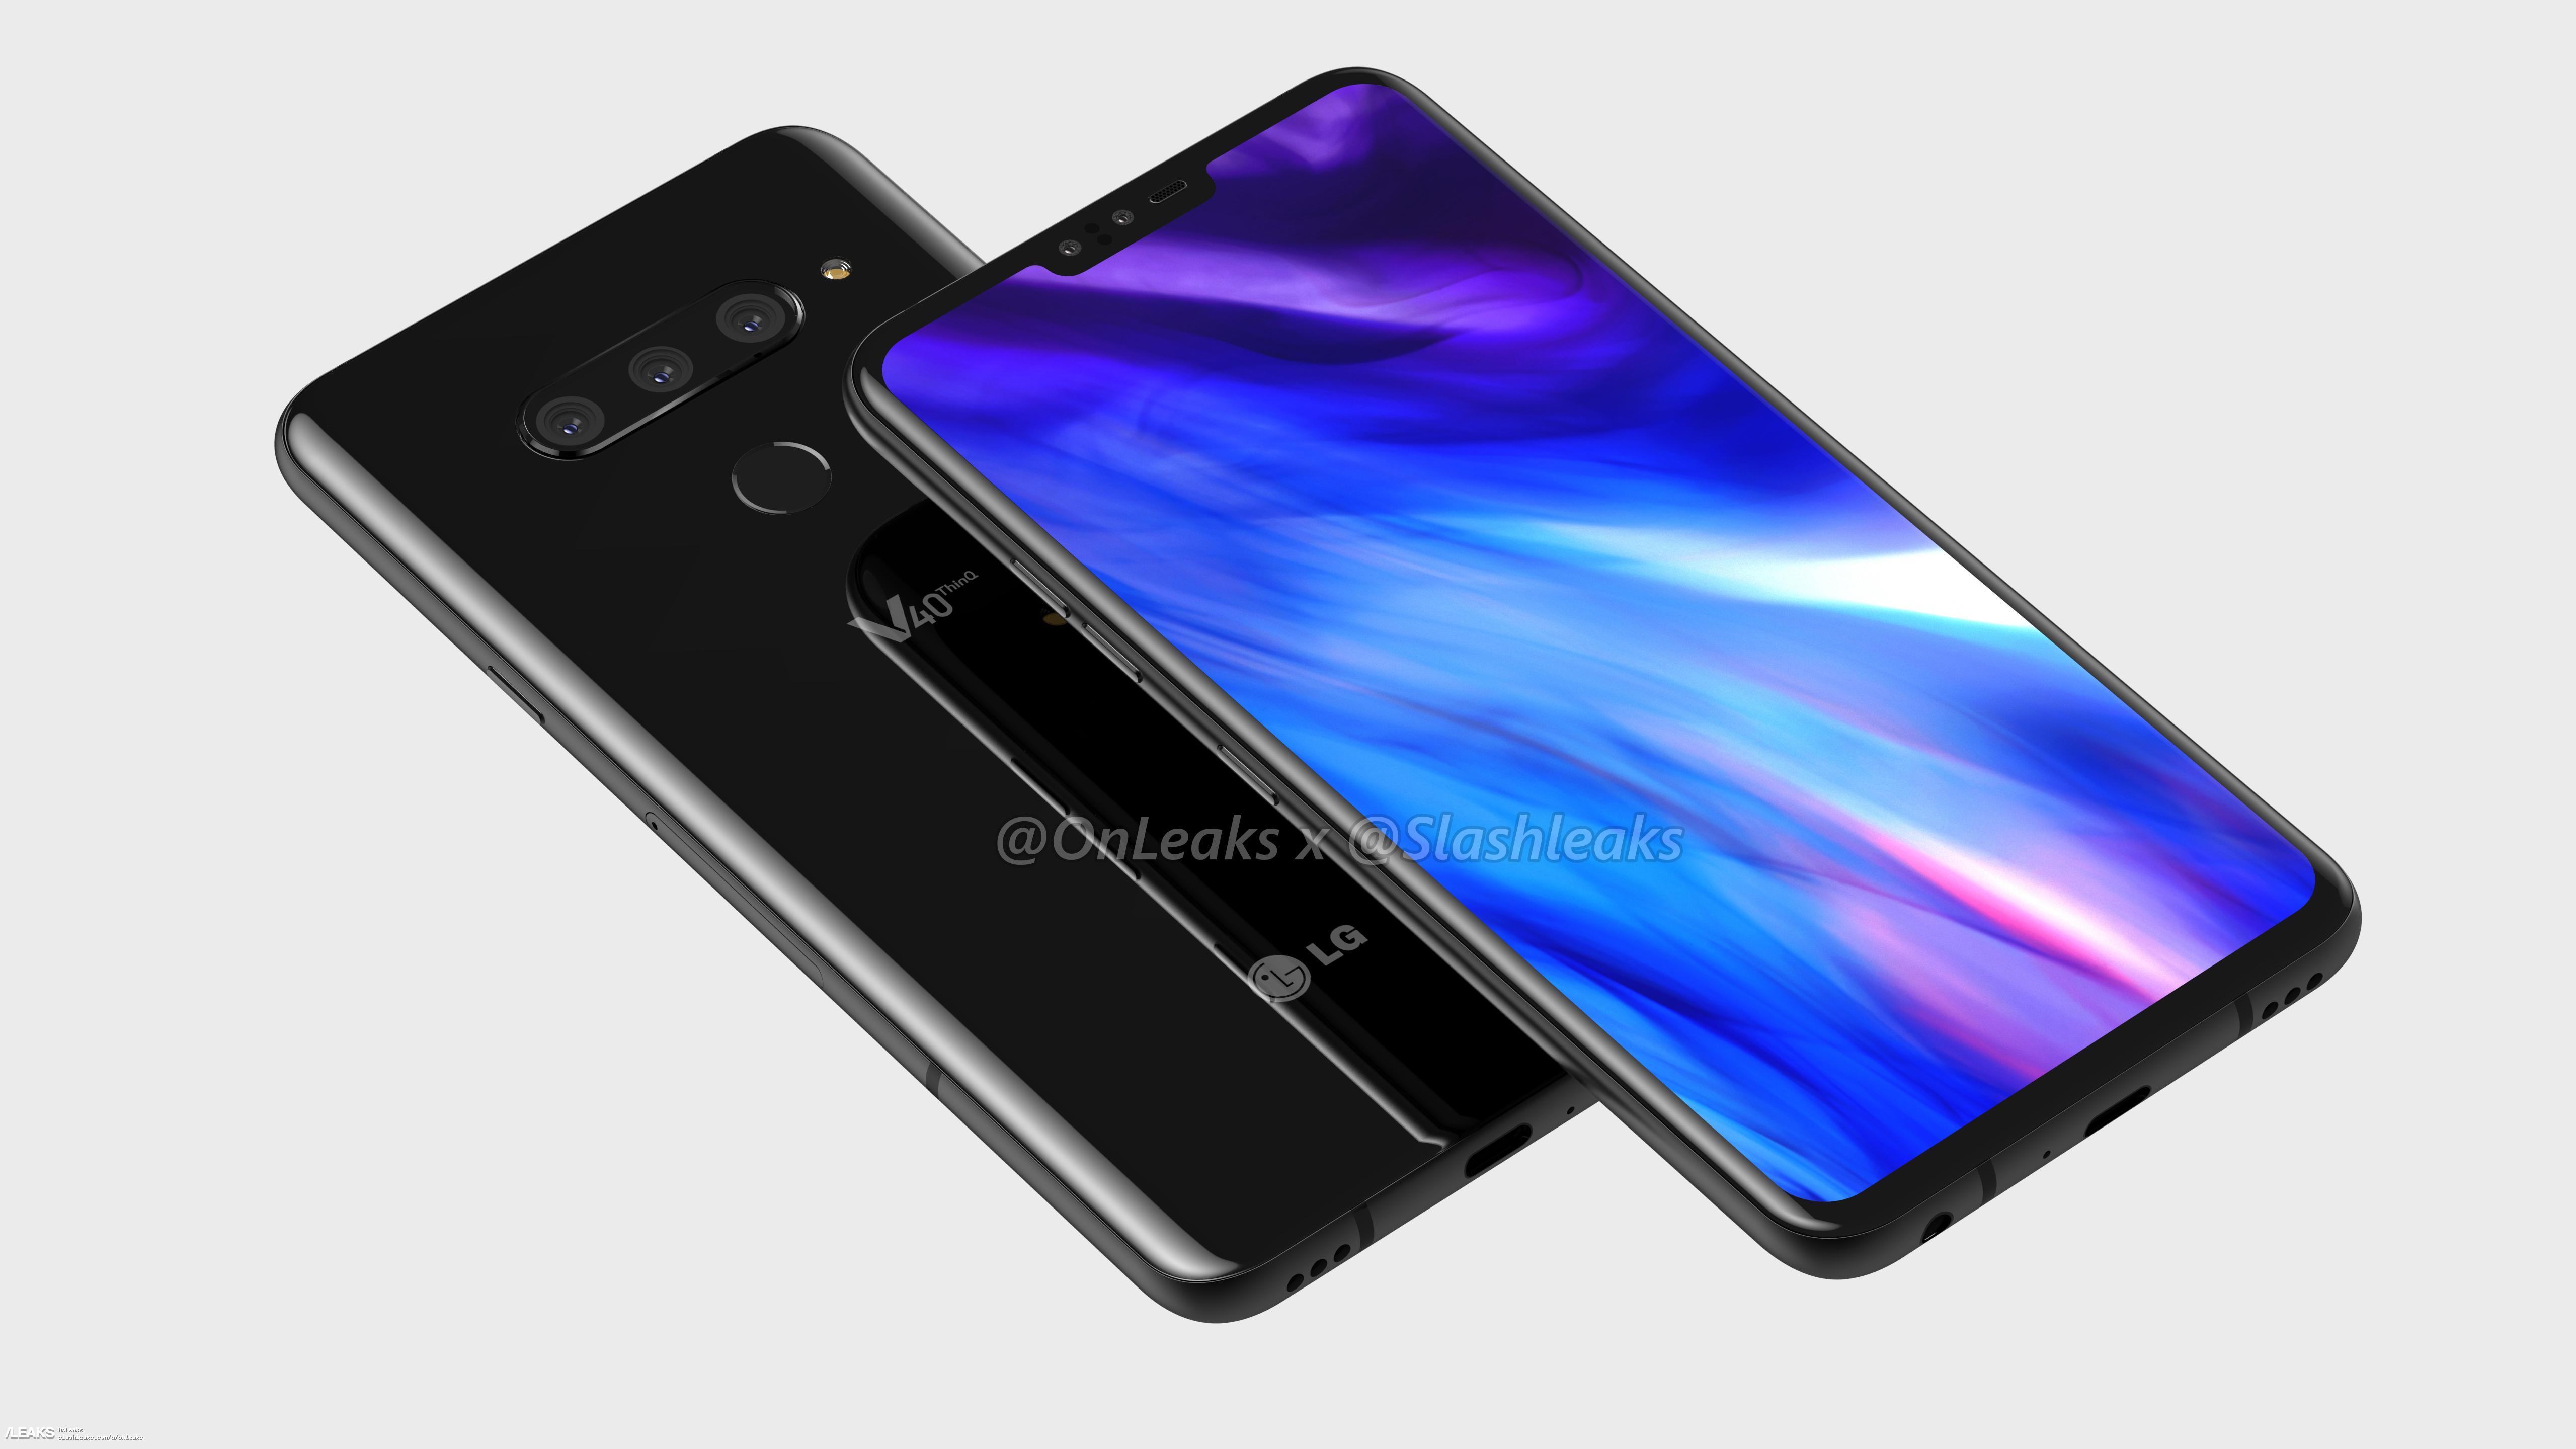 Galaxy-S10-vs-iPhone-XS-2018-LG-V40-Pixel-3-XL